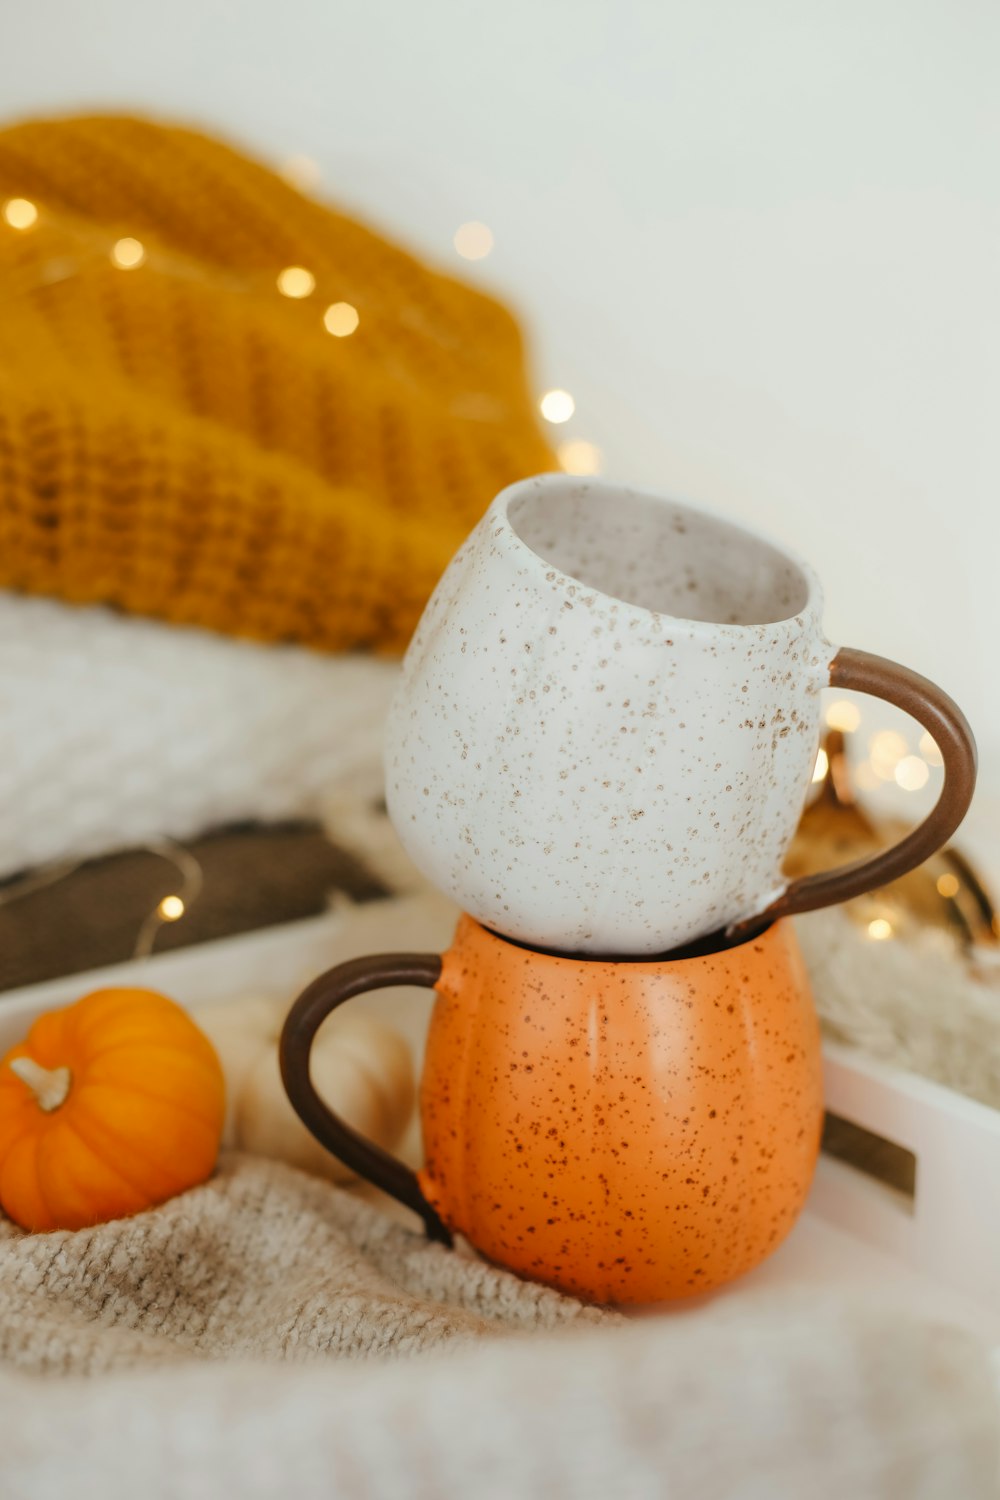 una taza de té junto a una calabaza y una rodaja de naranja